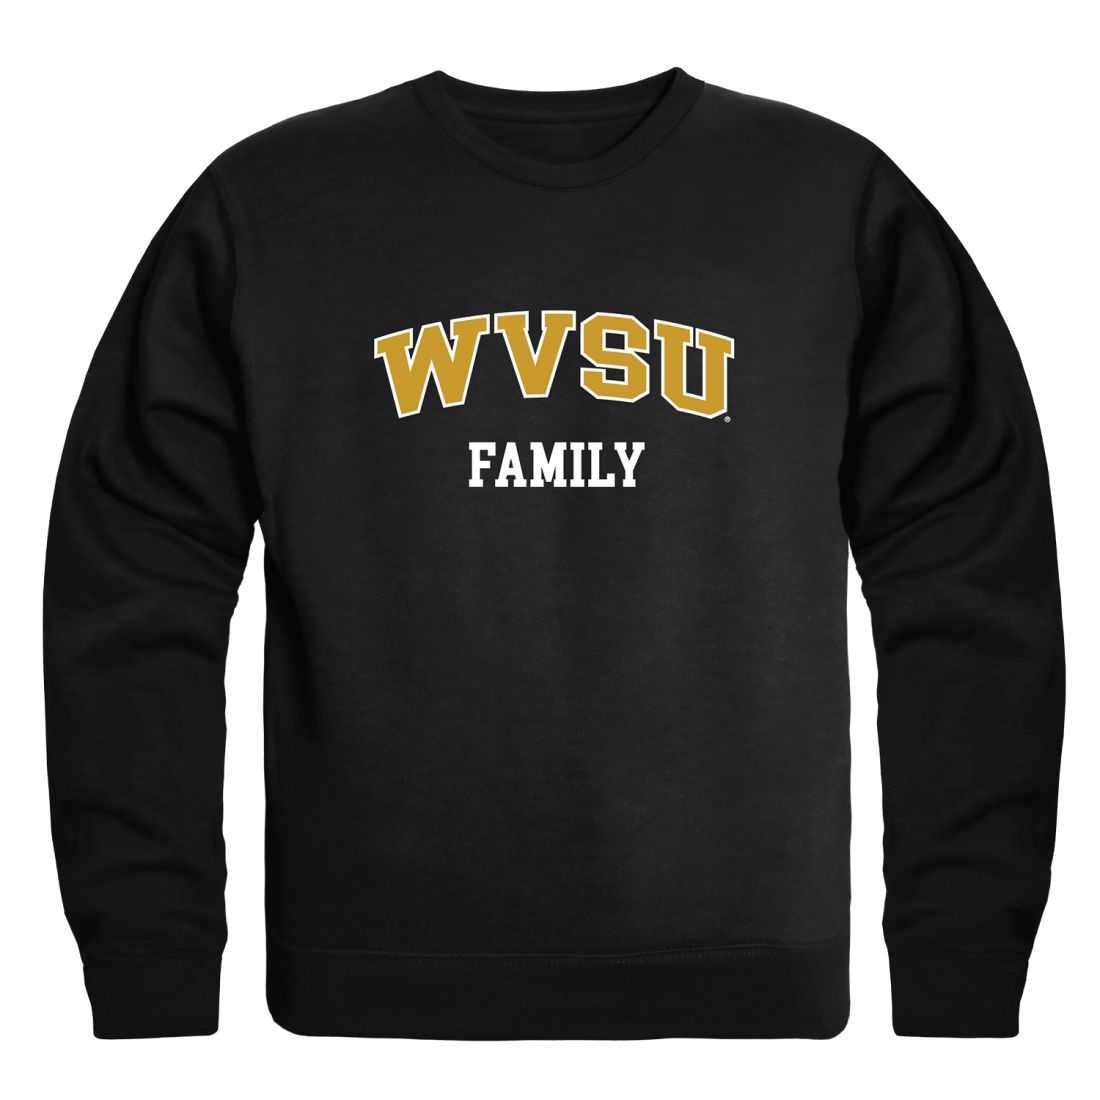 WVSU-West-Virginia-State-University-Yellow-Jackets-Family-Fleece-Crewneck-Pullover-Sweatshirt